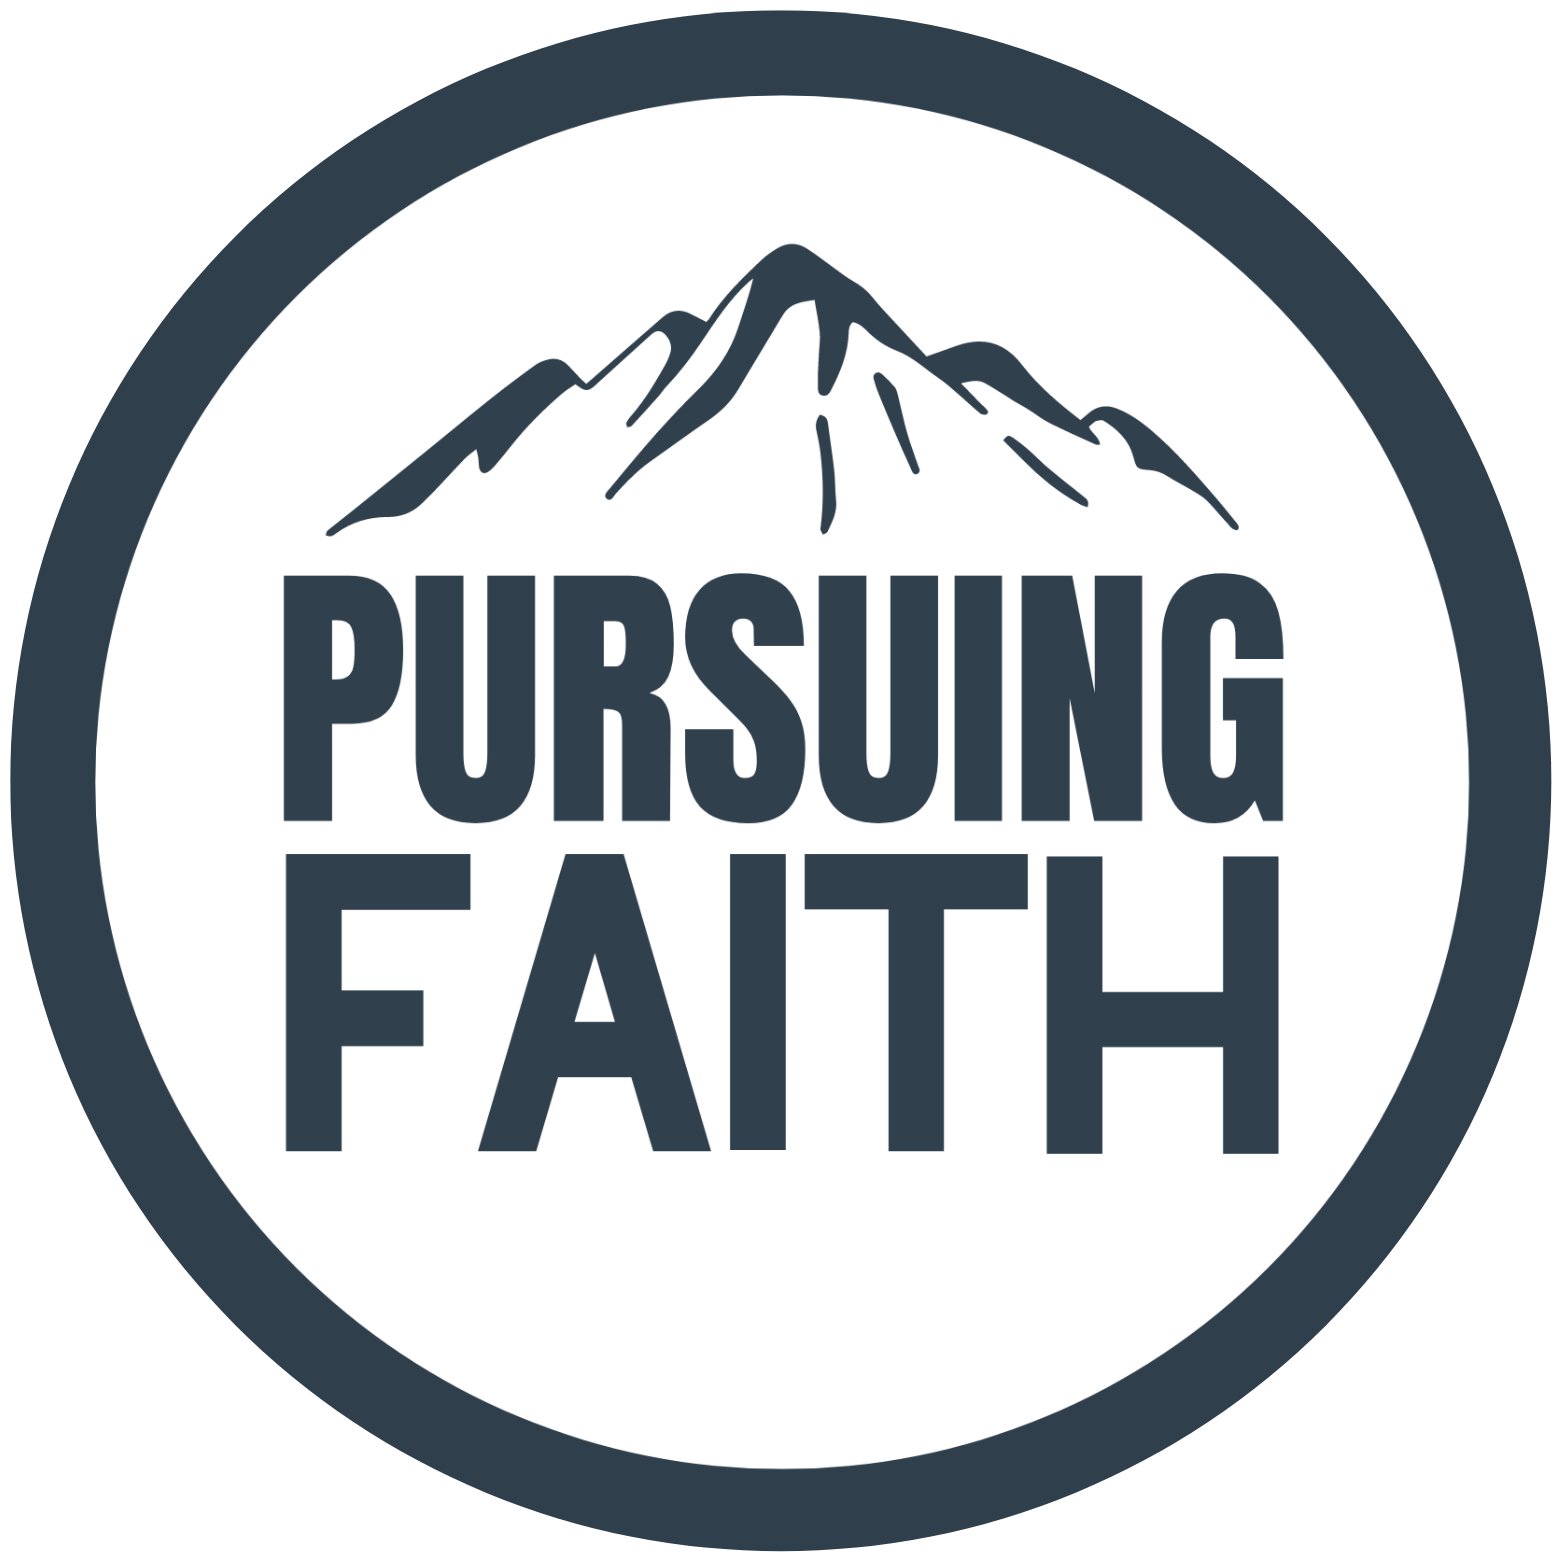 Pursuing Faith